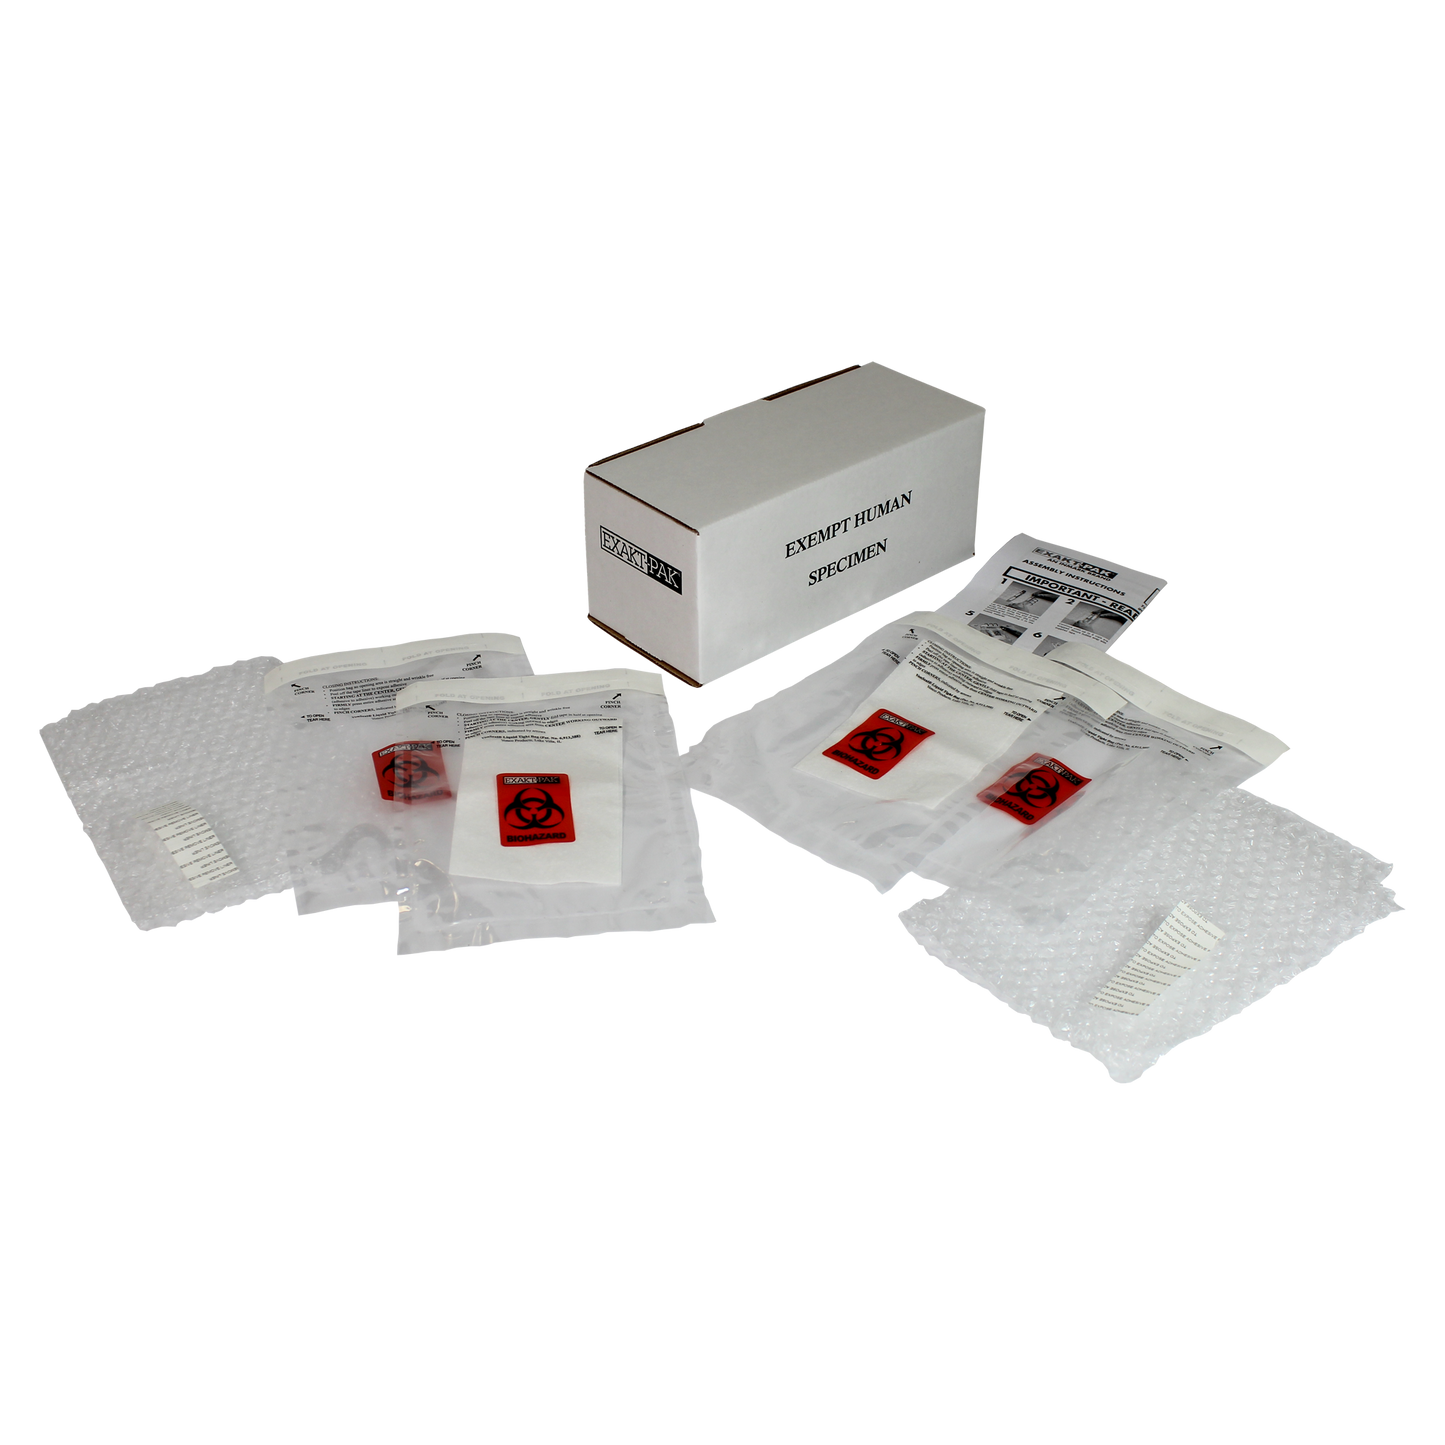 ME-H8750V12 - EXAKT-PAK® DX-Pak® Exempt Ambient Human Specimen Insulated Shipping Solution (Single Pack)